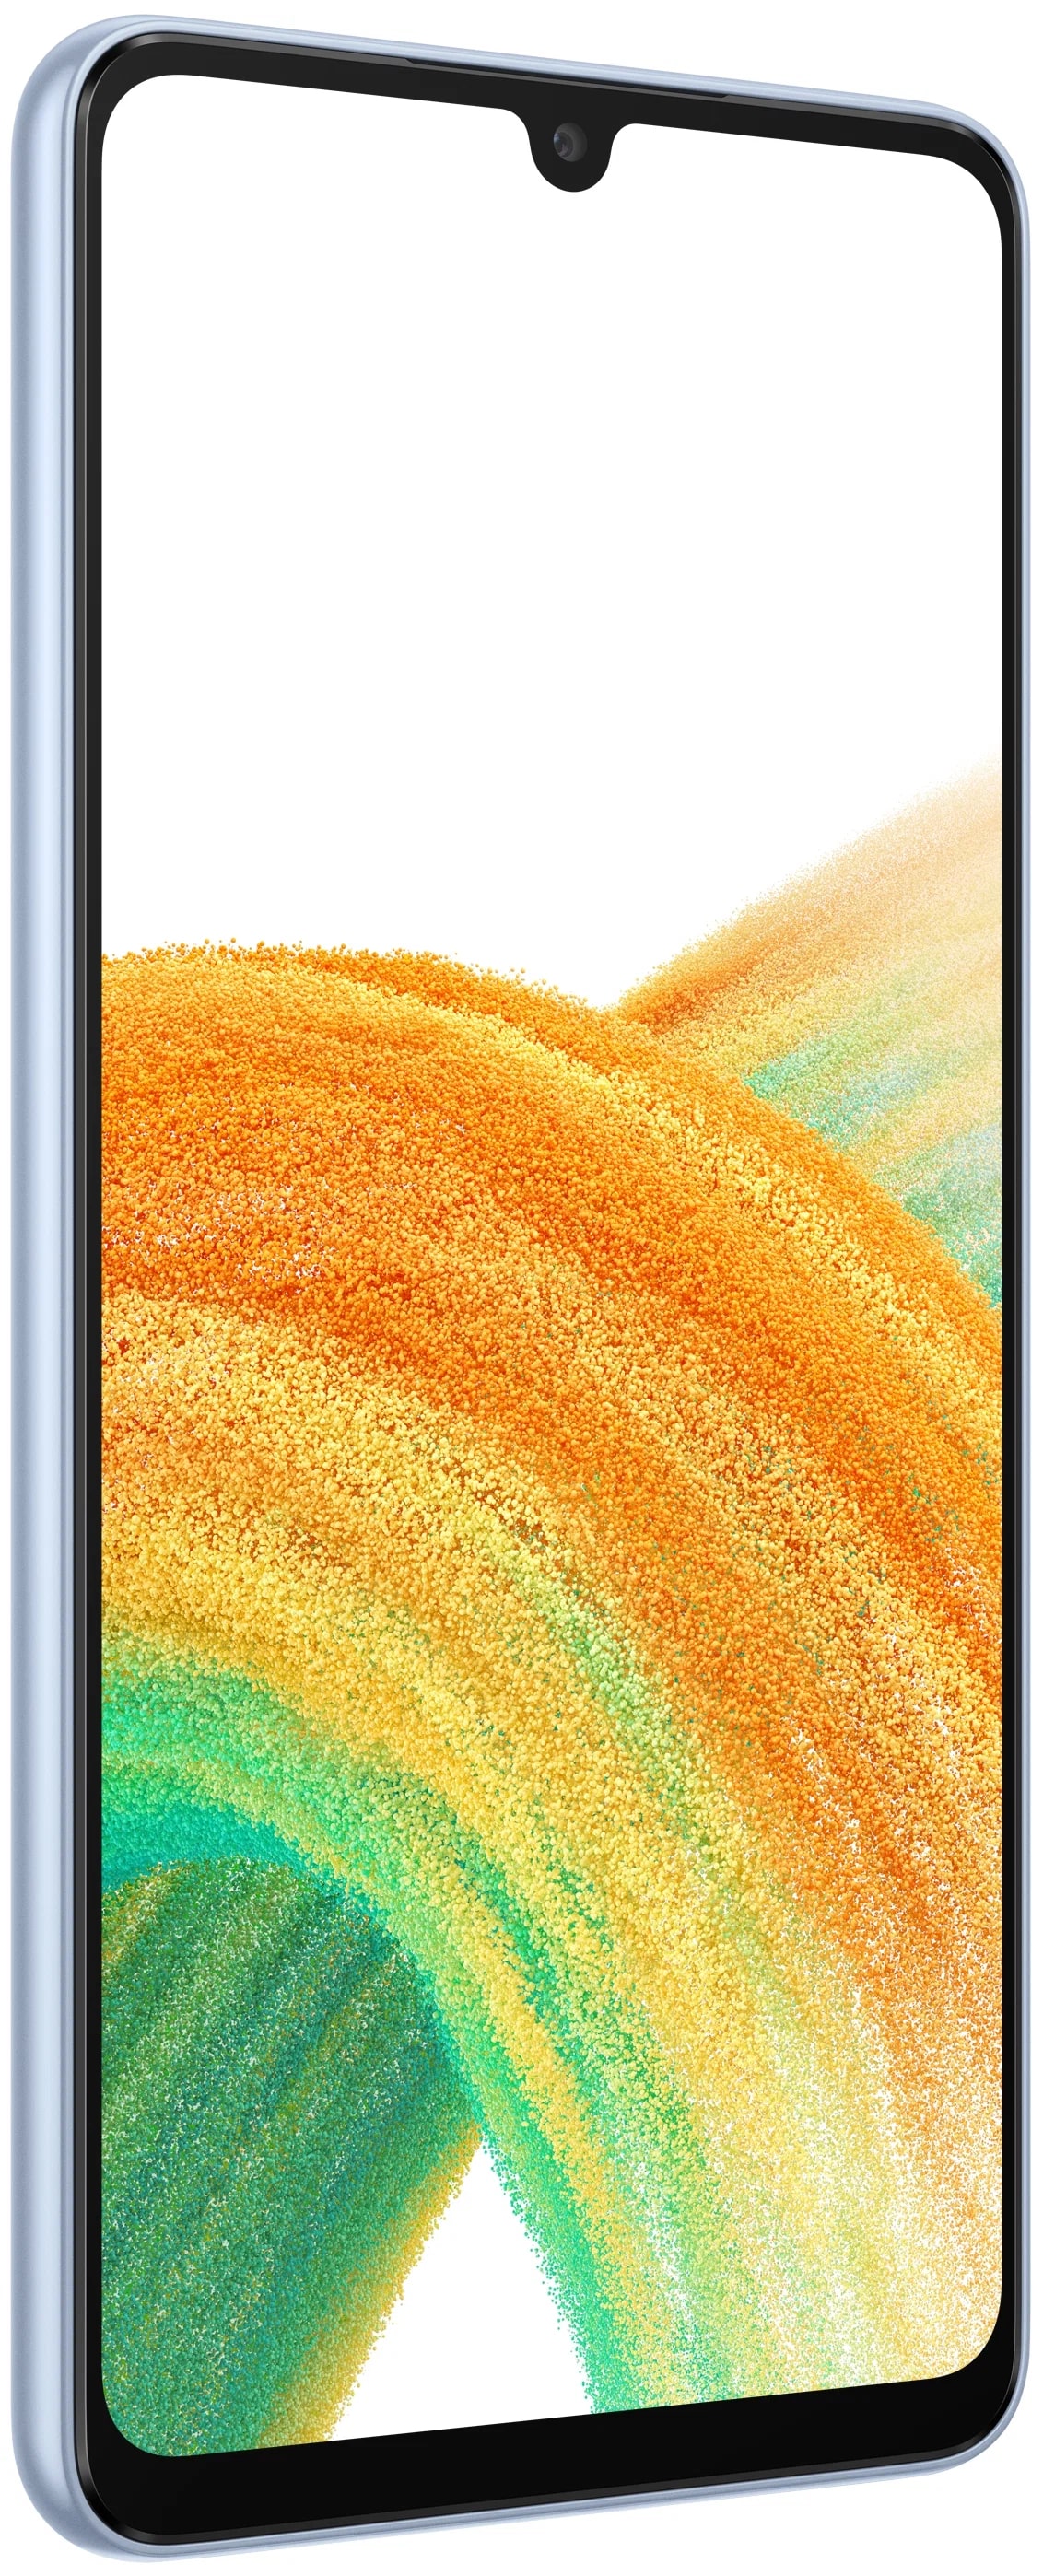 Телефон Samsung Galaxy A33 6+ 128Gb голубой (6 месяцев)